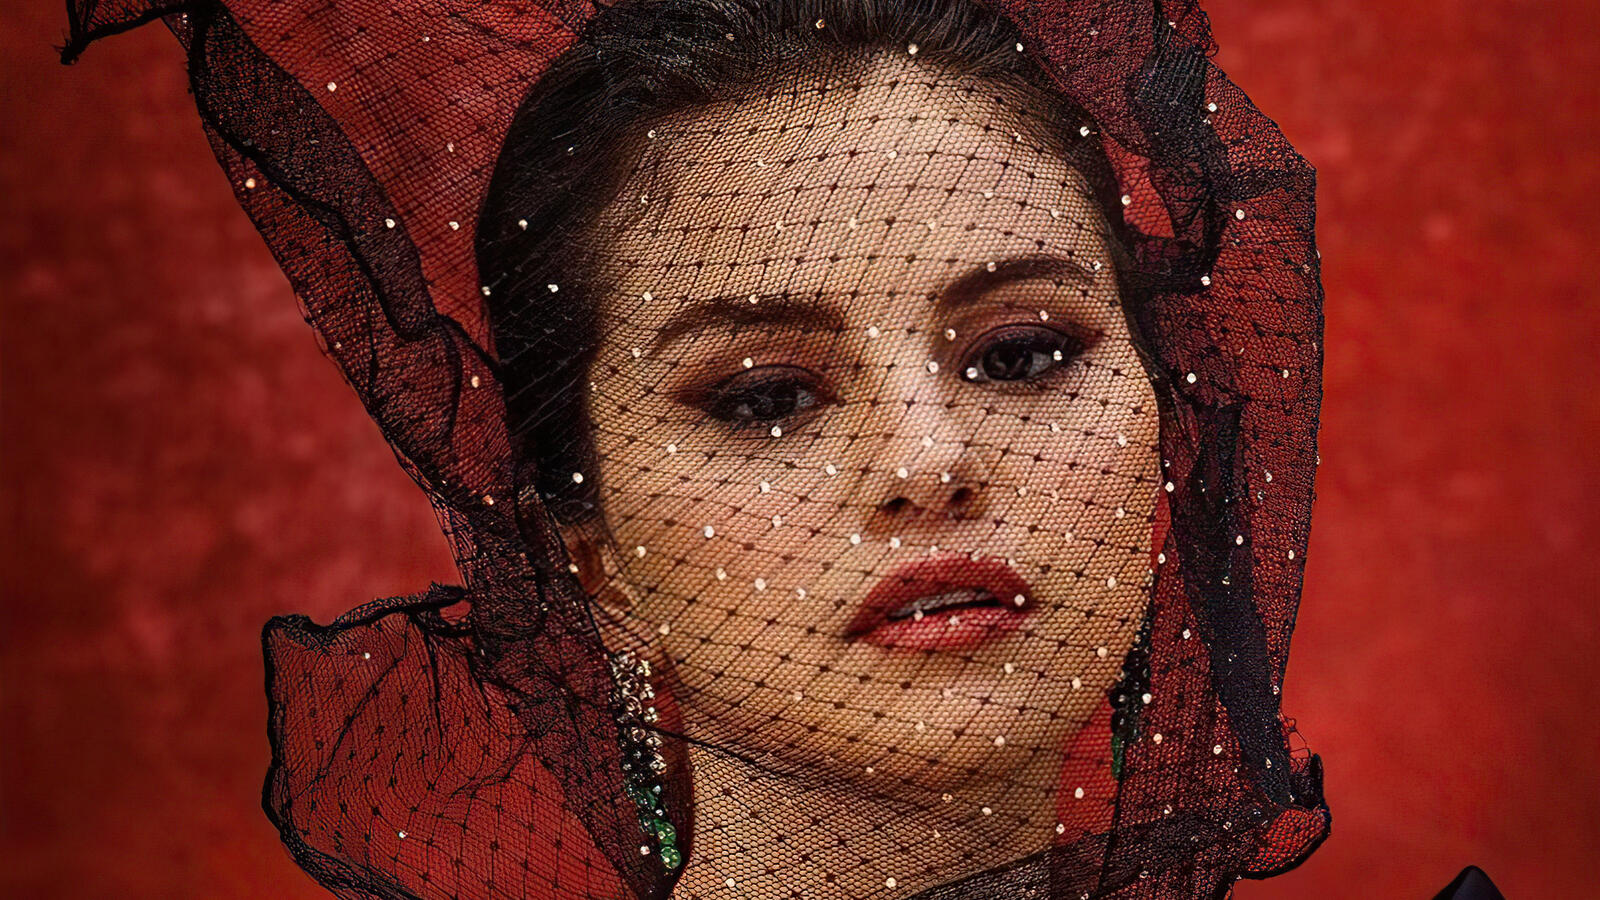 Wallpapers photoshoot girls Selena Gomez on the desktop